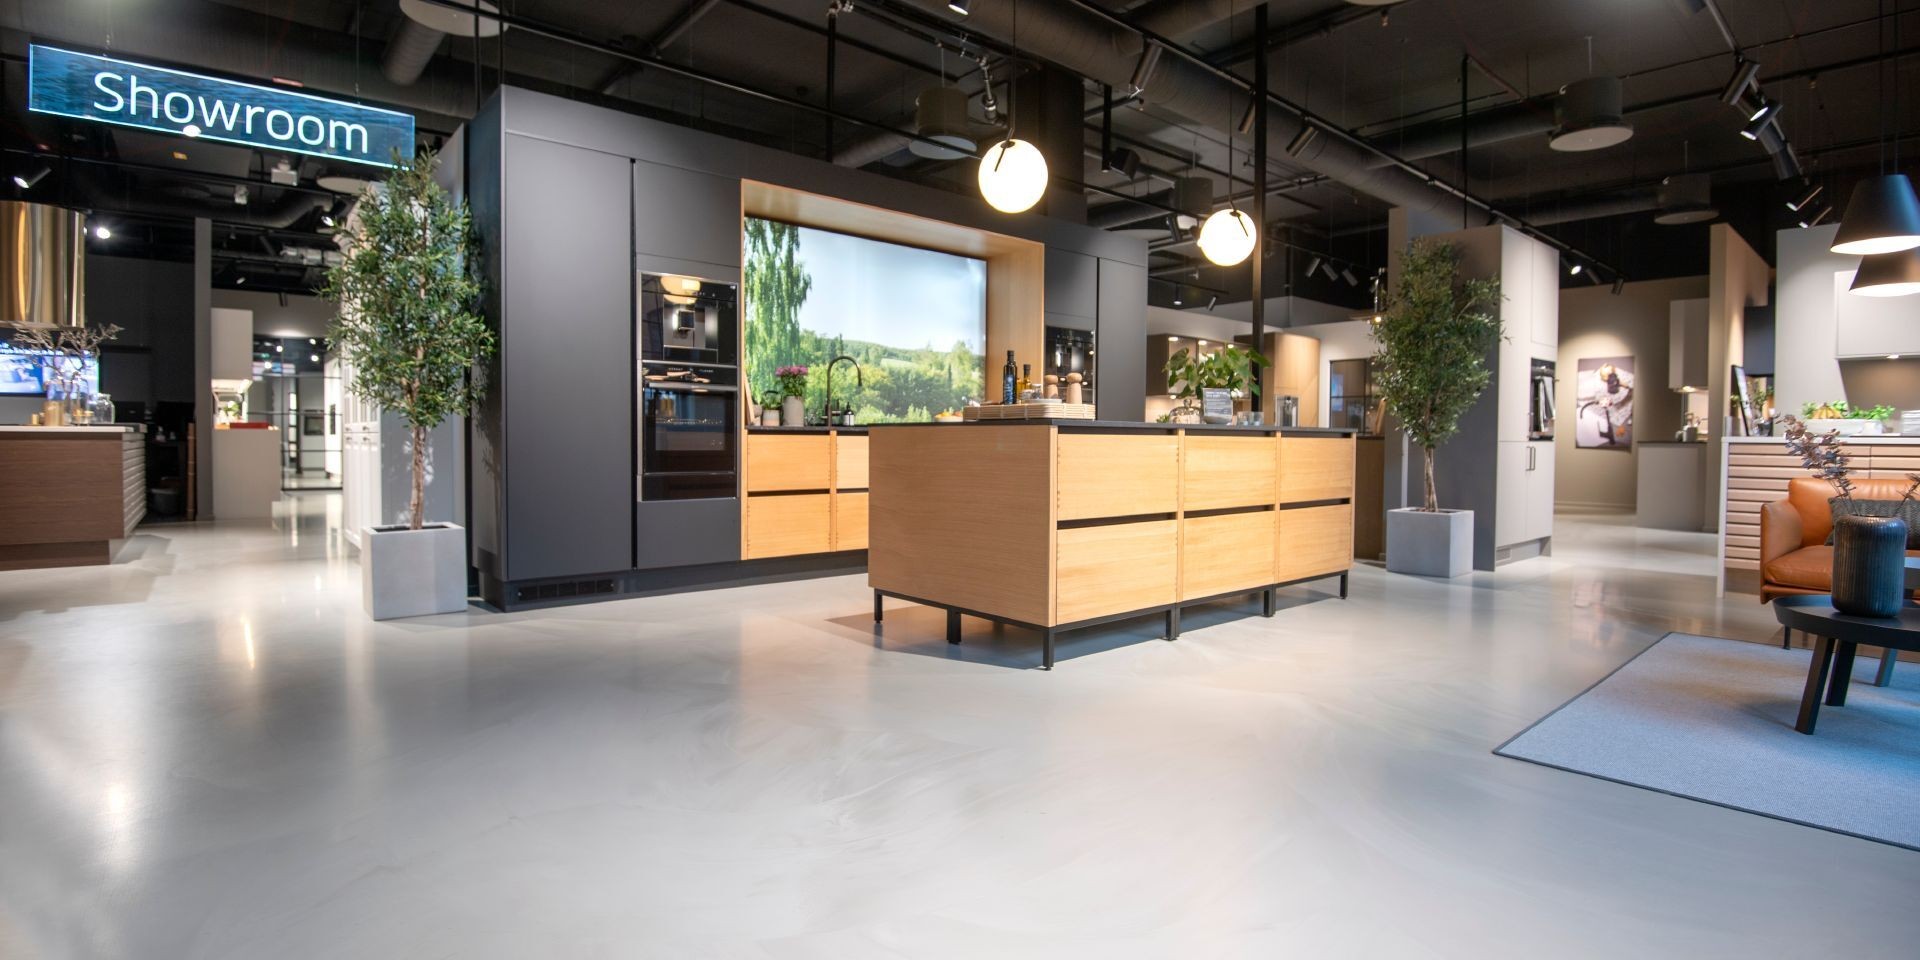 A unique flooring solution to showcase stylish Danish kitchen designs 